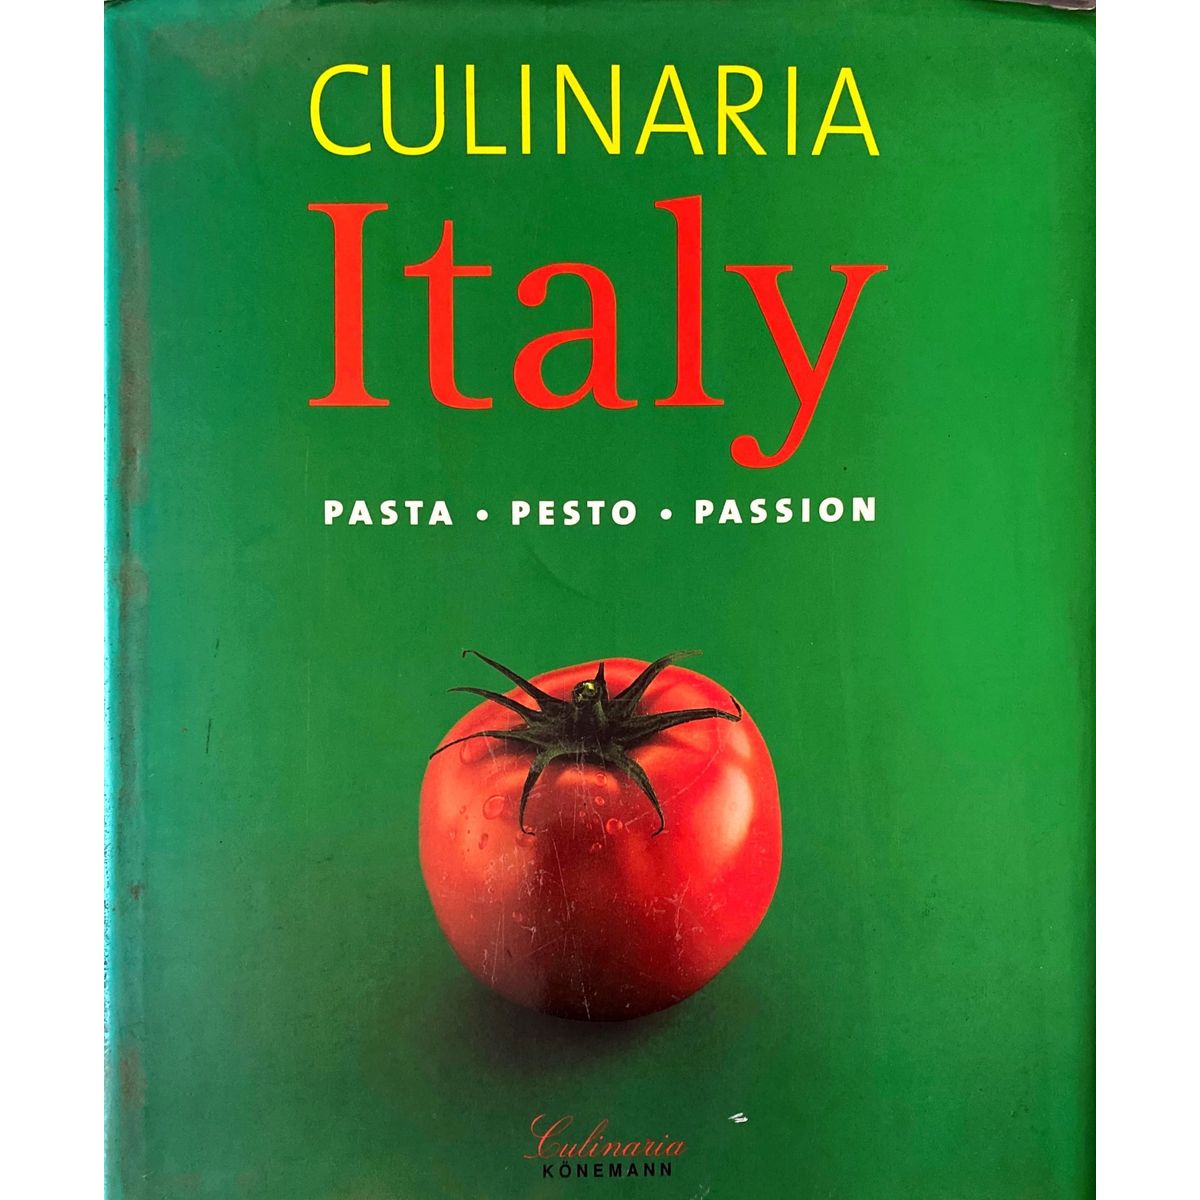 ISBN: 9783829029018 / 3829029012 - Culinara Italy by Claudia Piras and Eugenio Medagliani, photographs by Ruprecht Stempell & Günter Beer [2000]